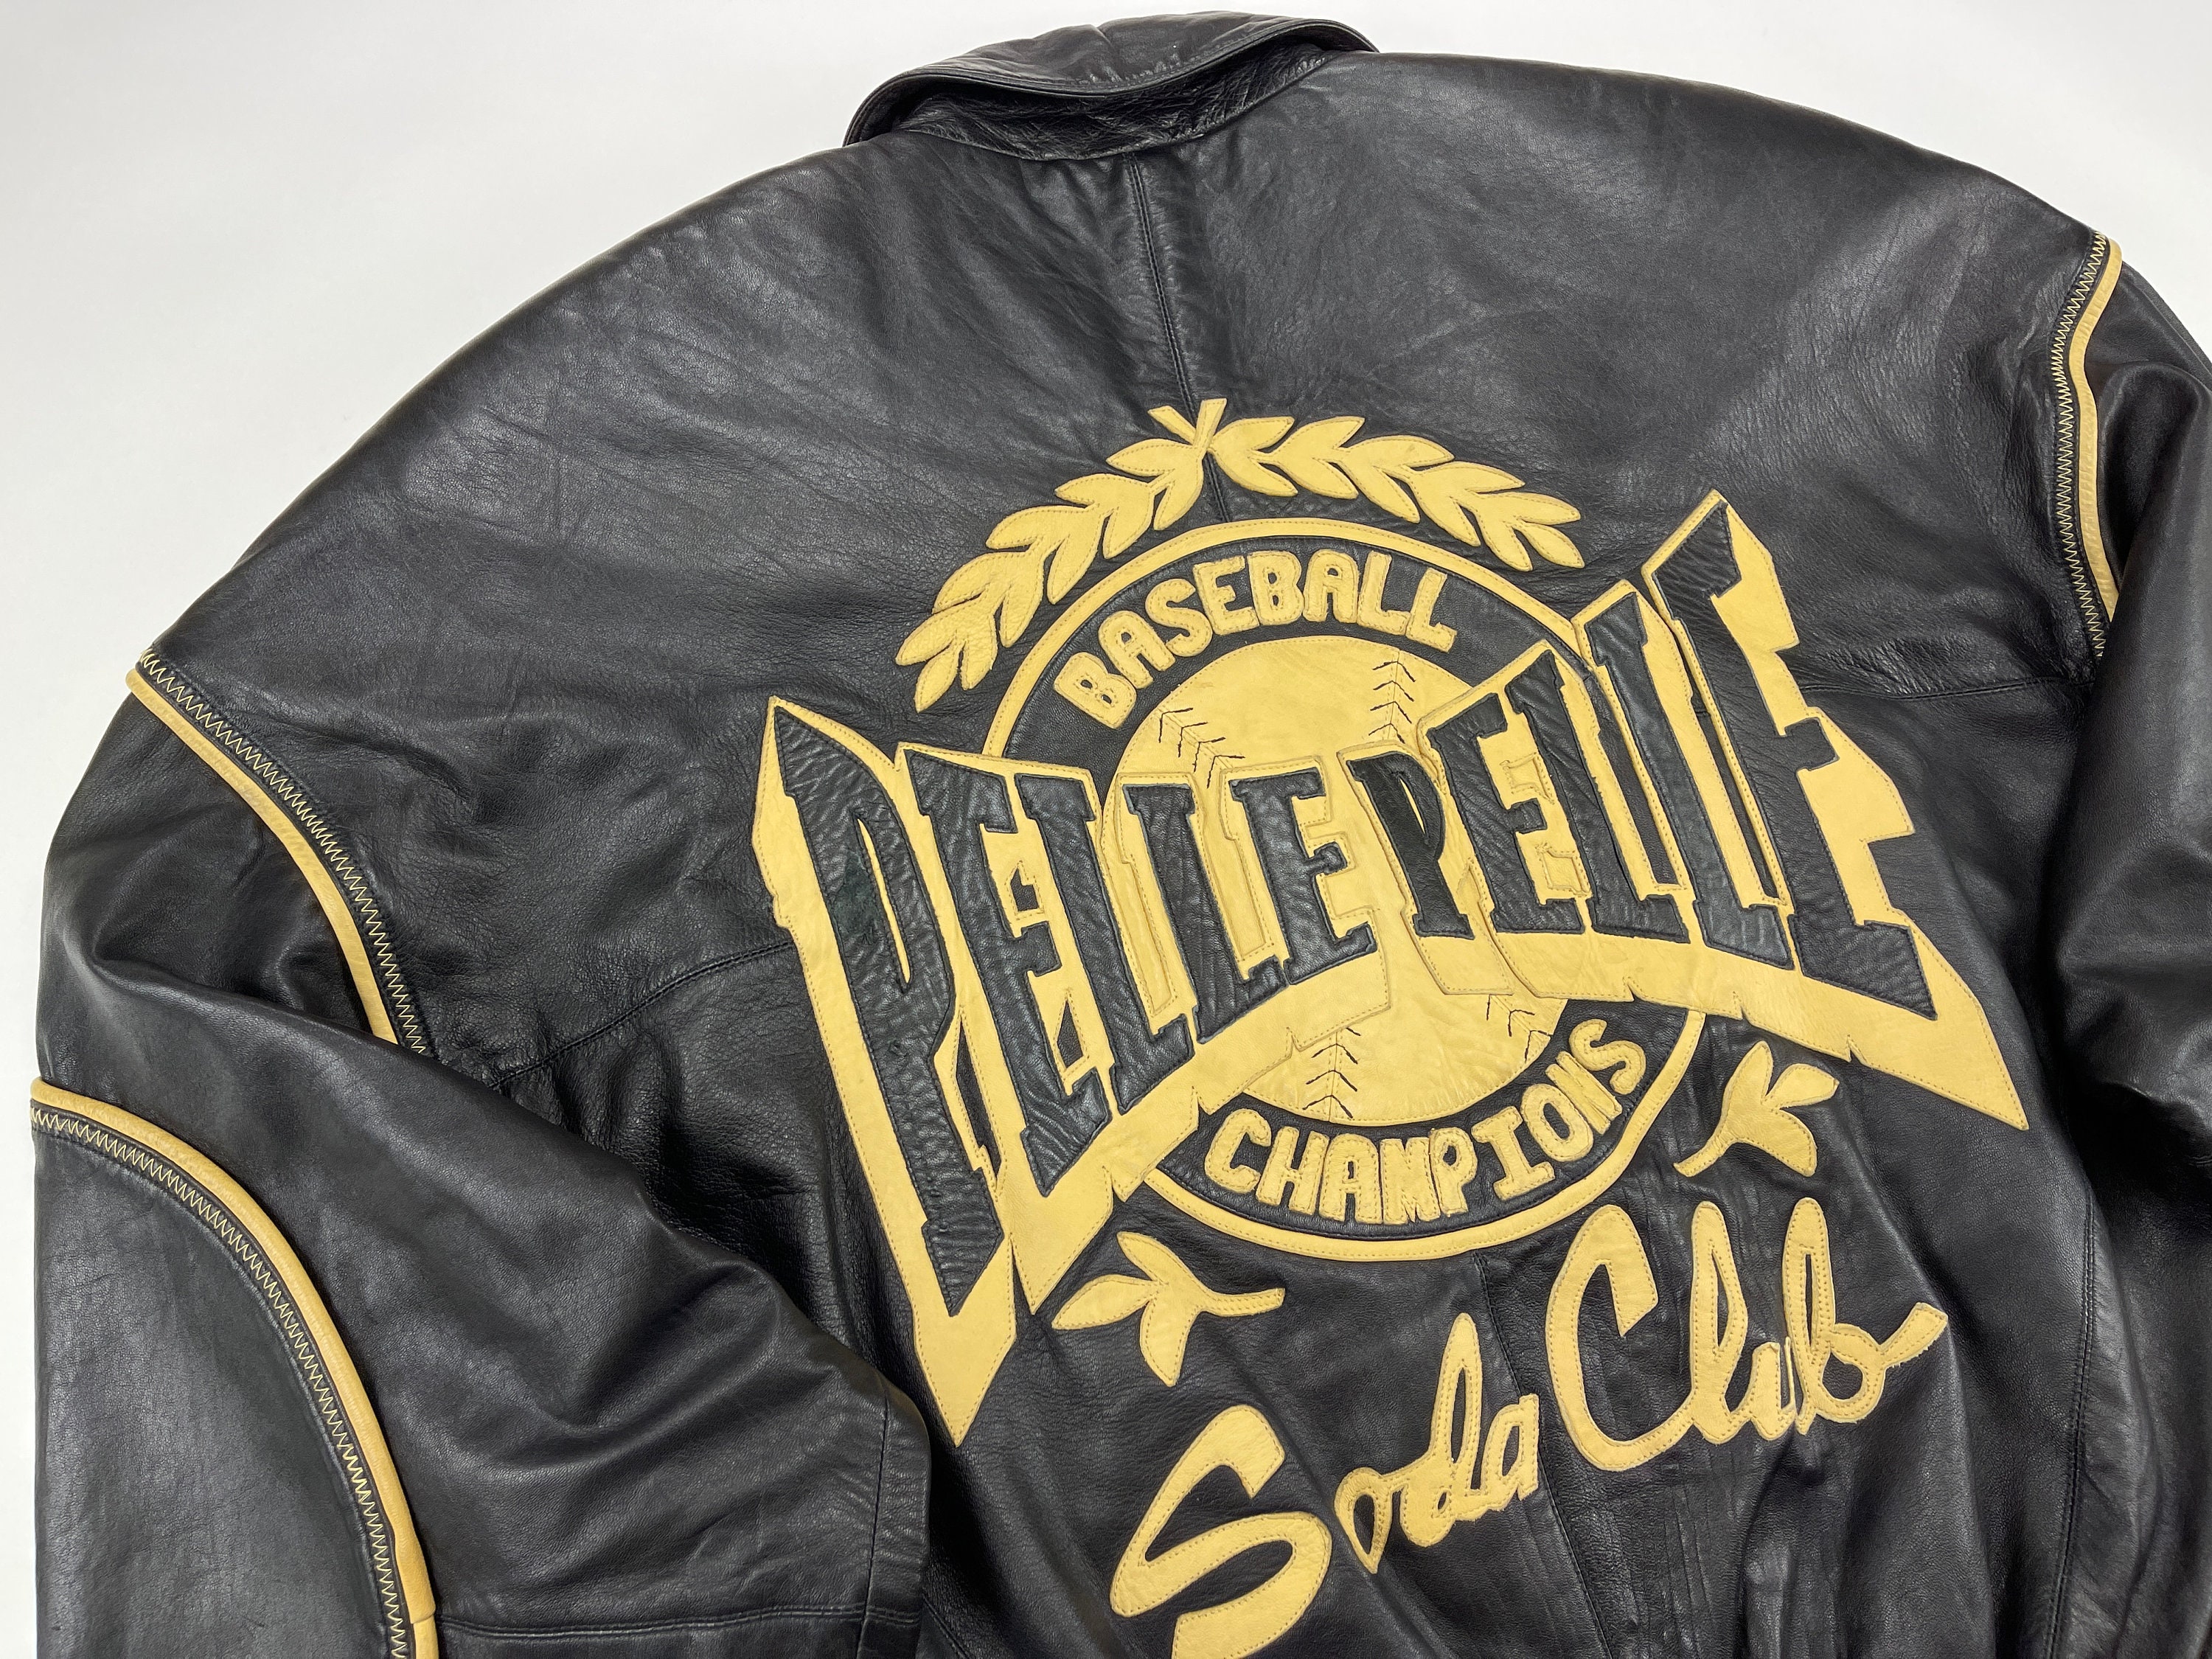 Vintage Pelle Pelle Marc Buchanan Compass Studded Leather Jacket